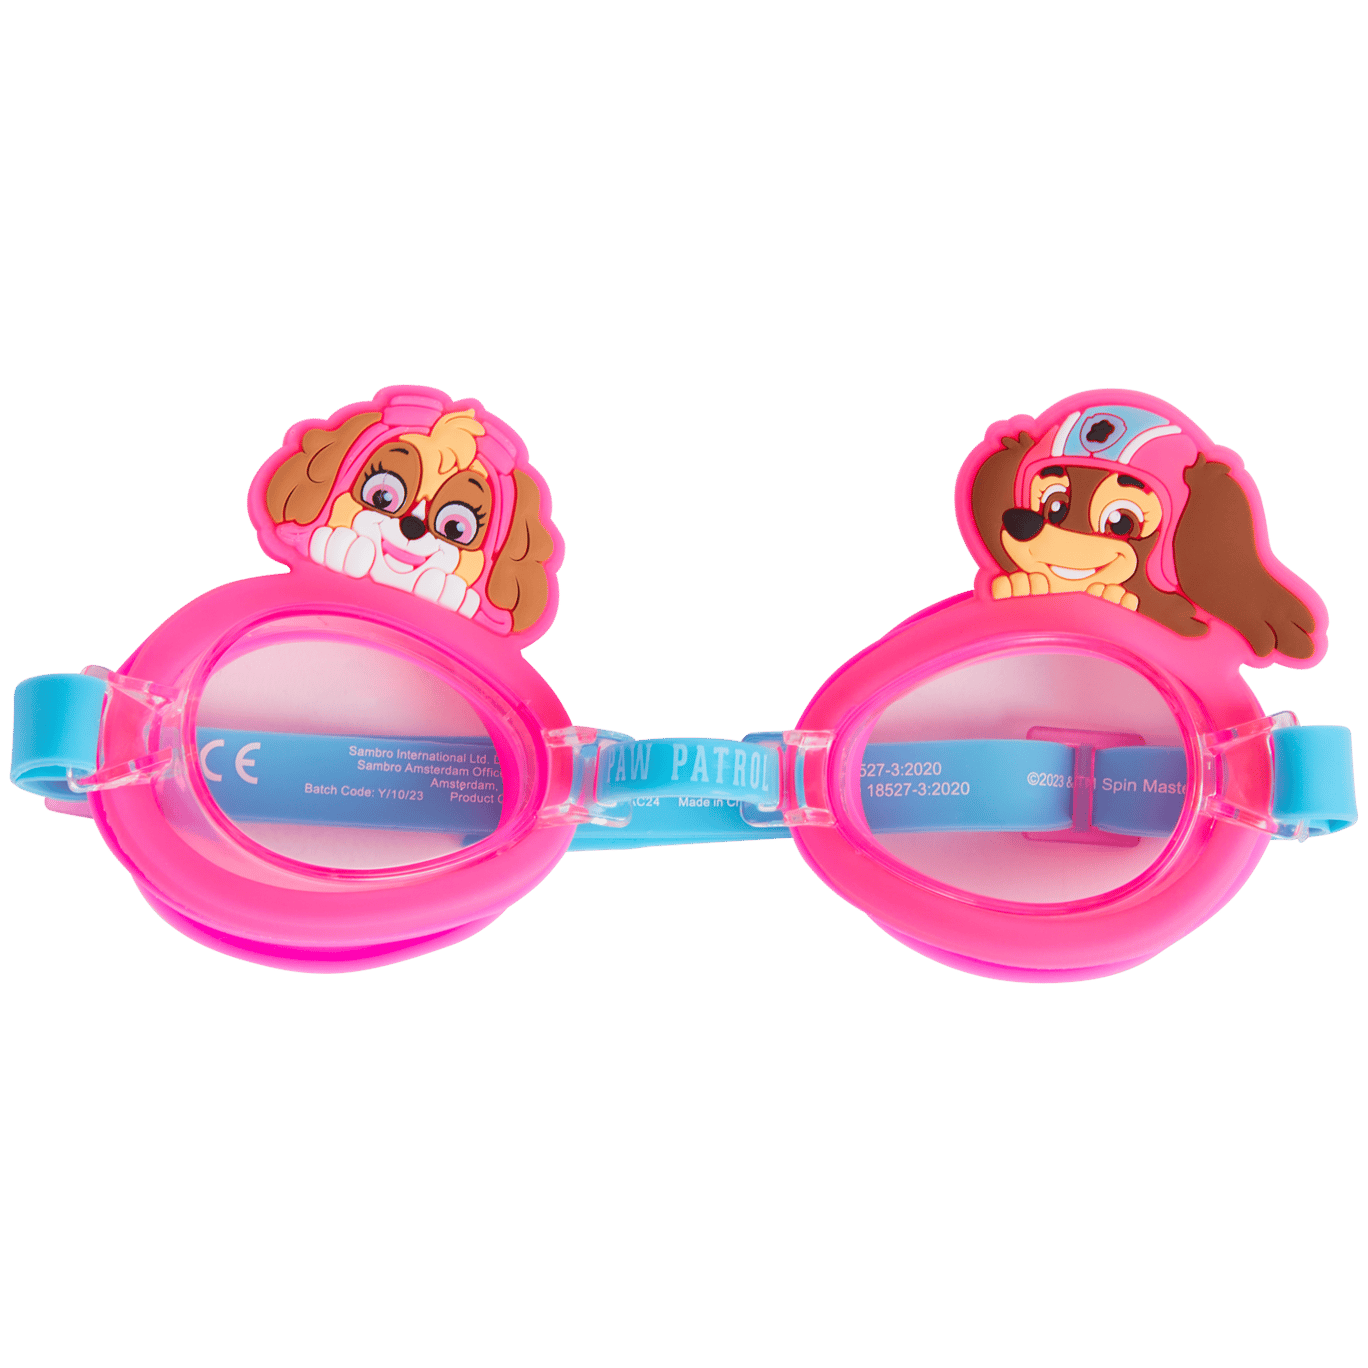 Okulary do pływania